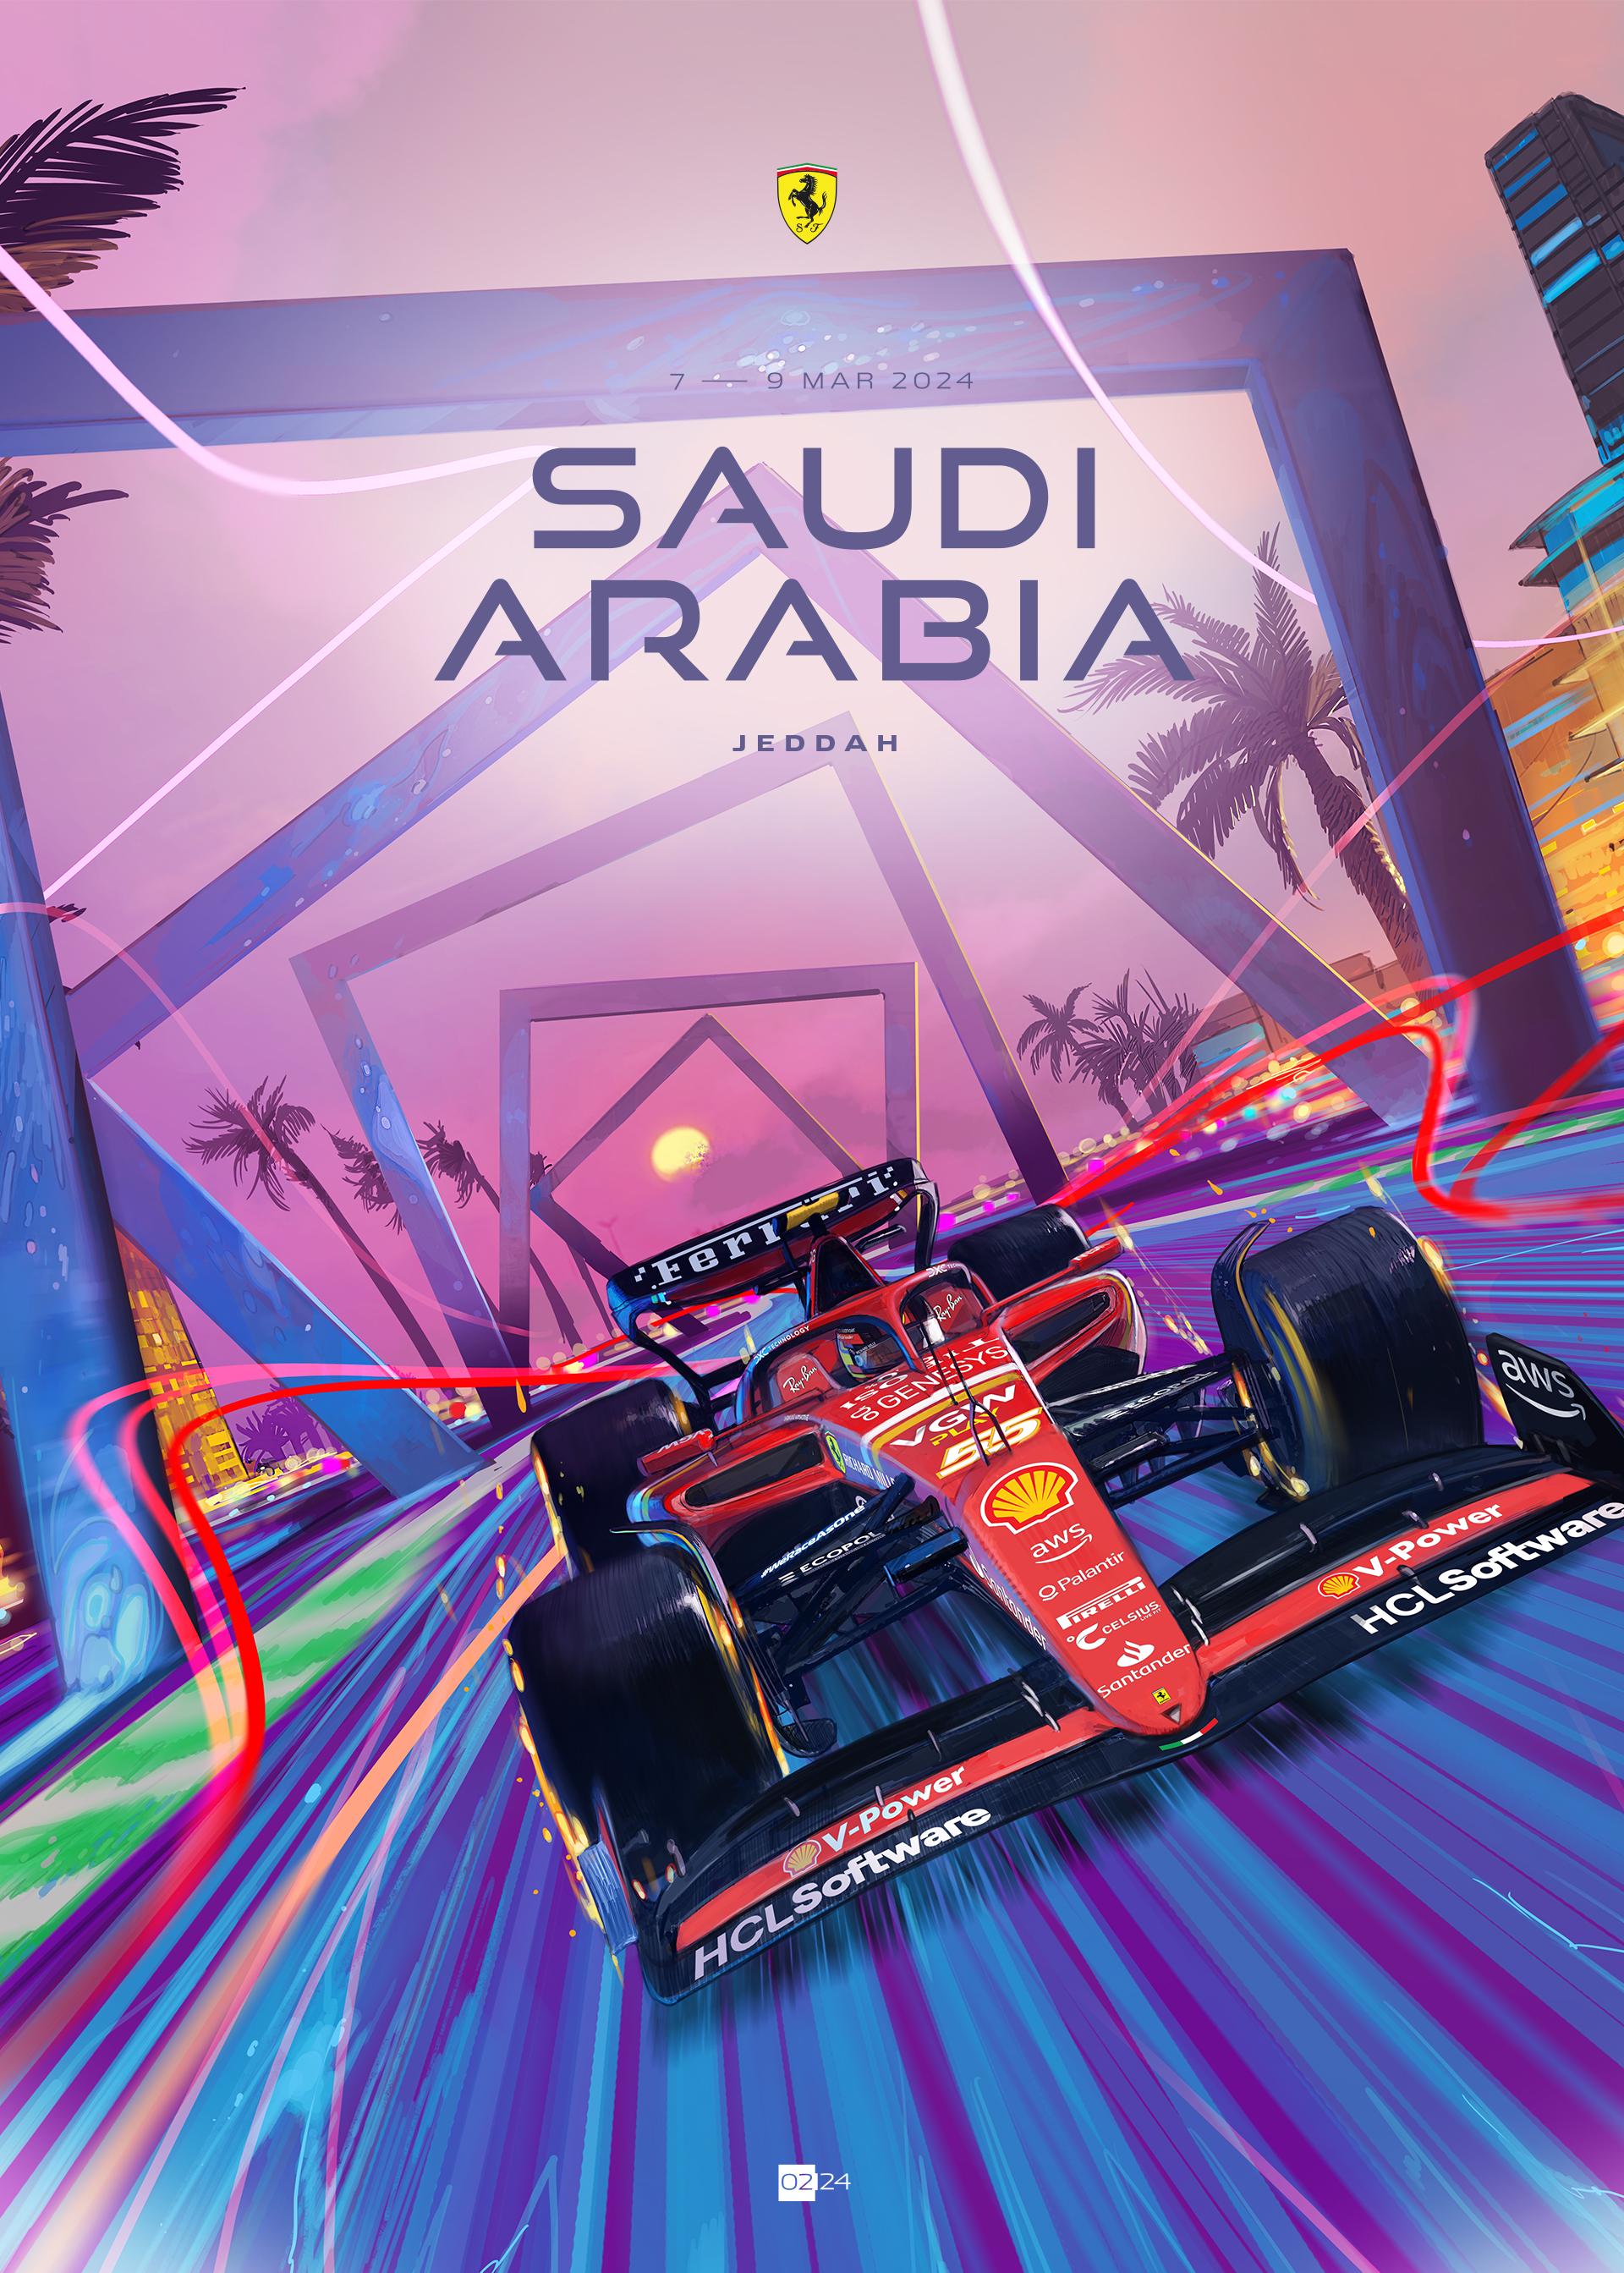 2024 f1 ferrari cover art race poster saudi arabia